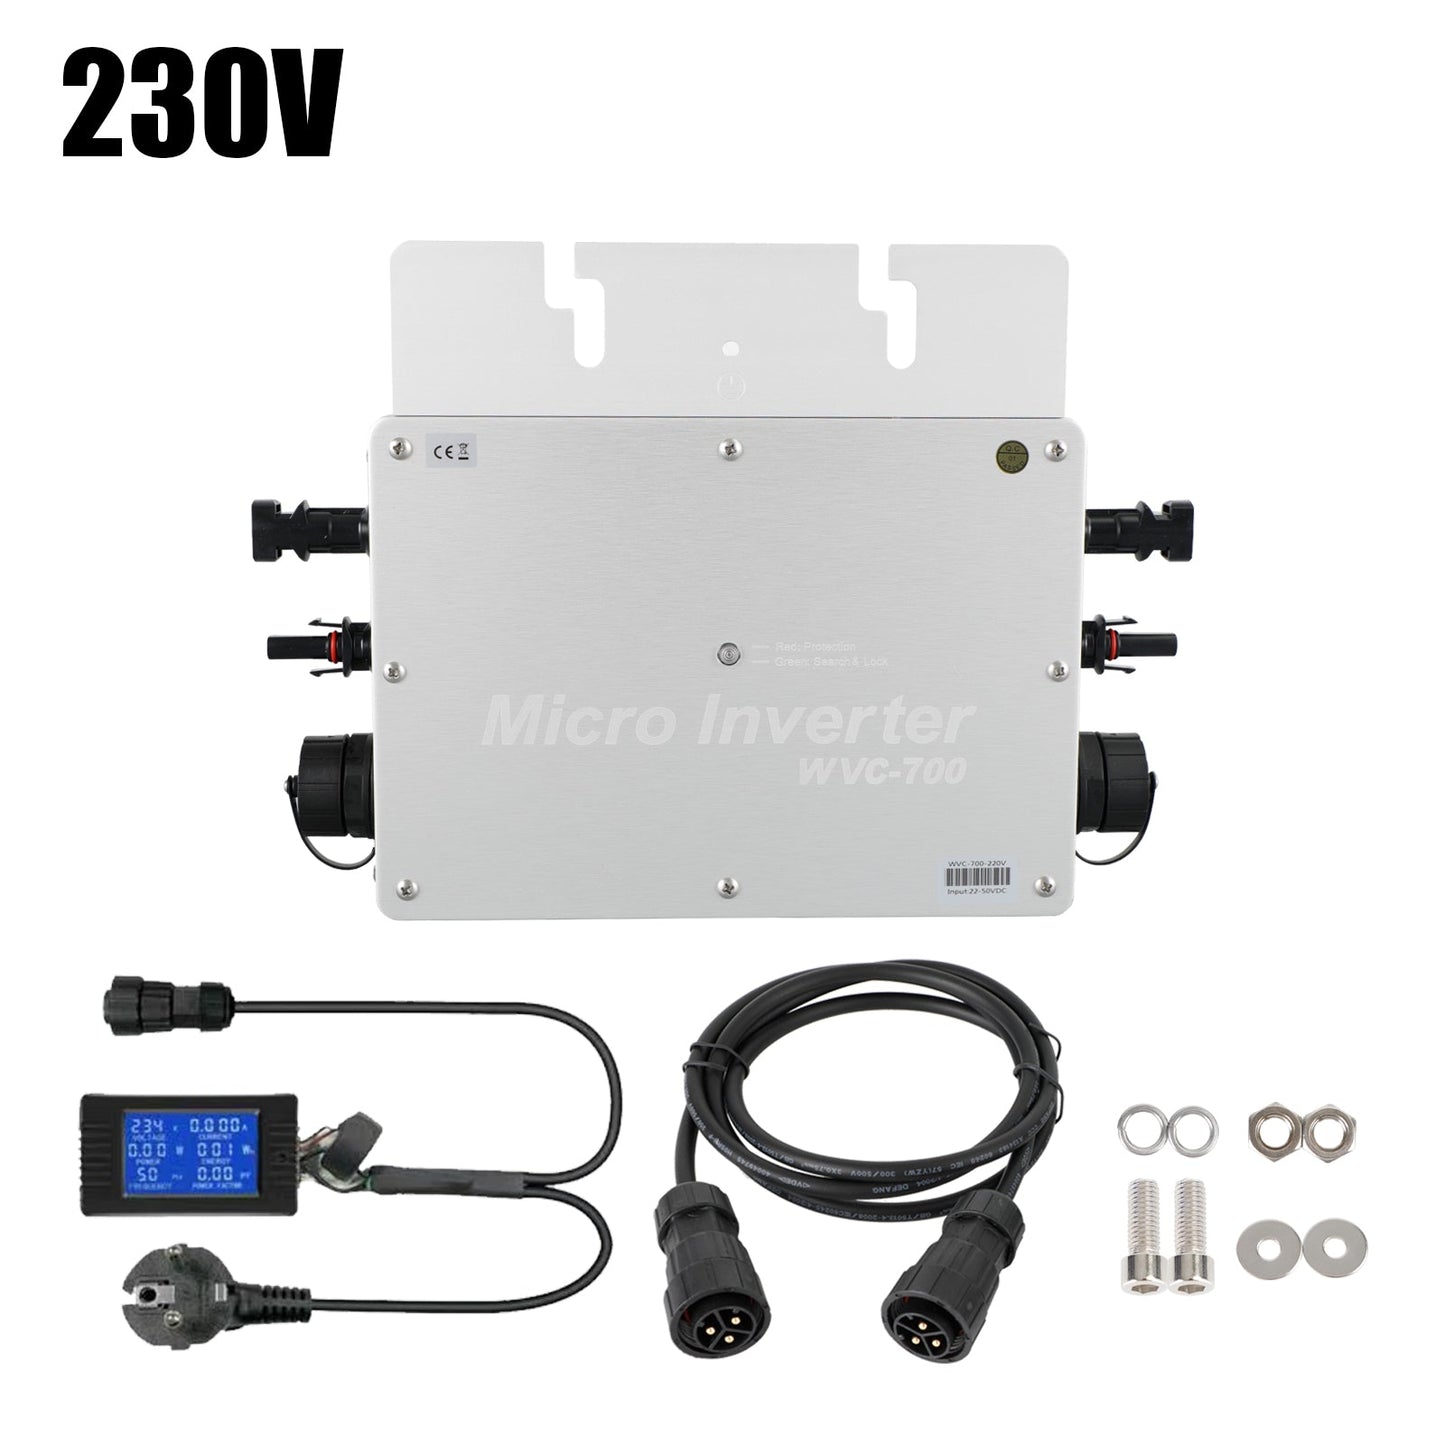 600W/110Vac IP65 Waterproof Solar Inverter Grid Tie MPPT Micro Inverter